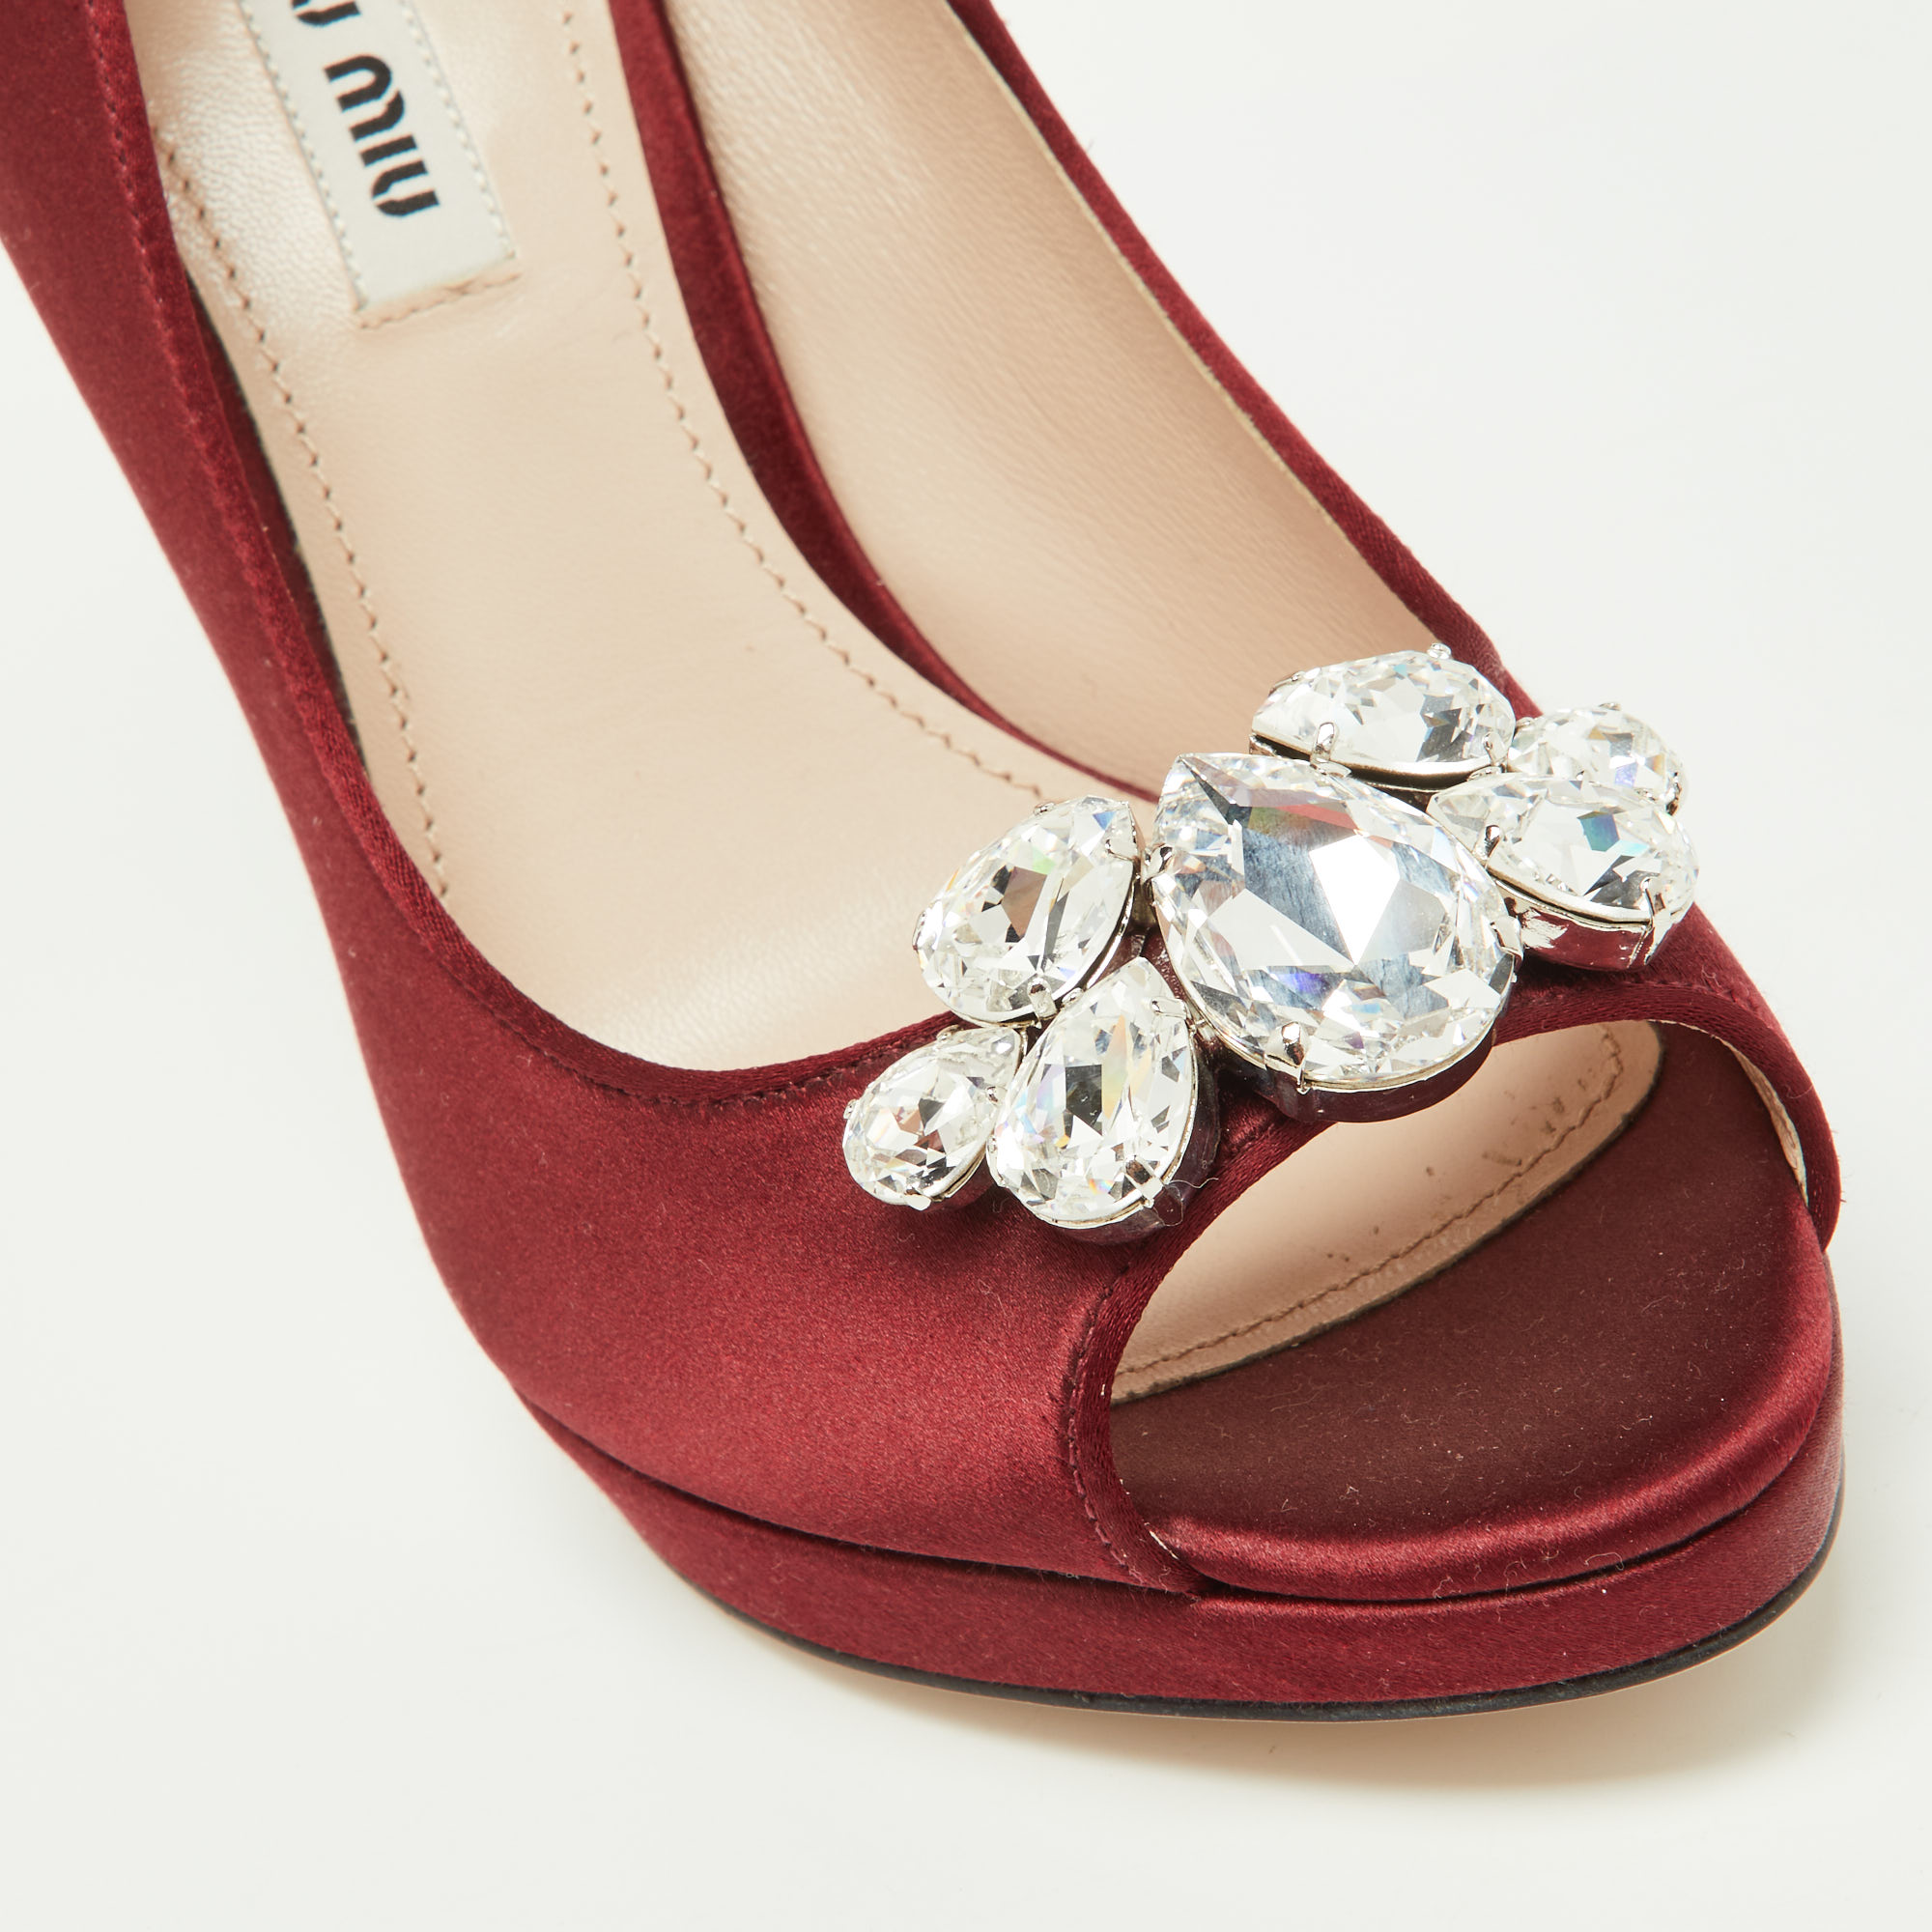 Miu Miu Burgundy Satin Crystal Embellished Heel Peep-Toe Pumps Size 38